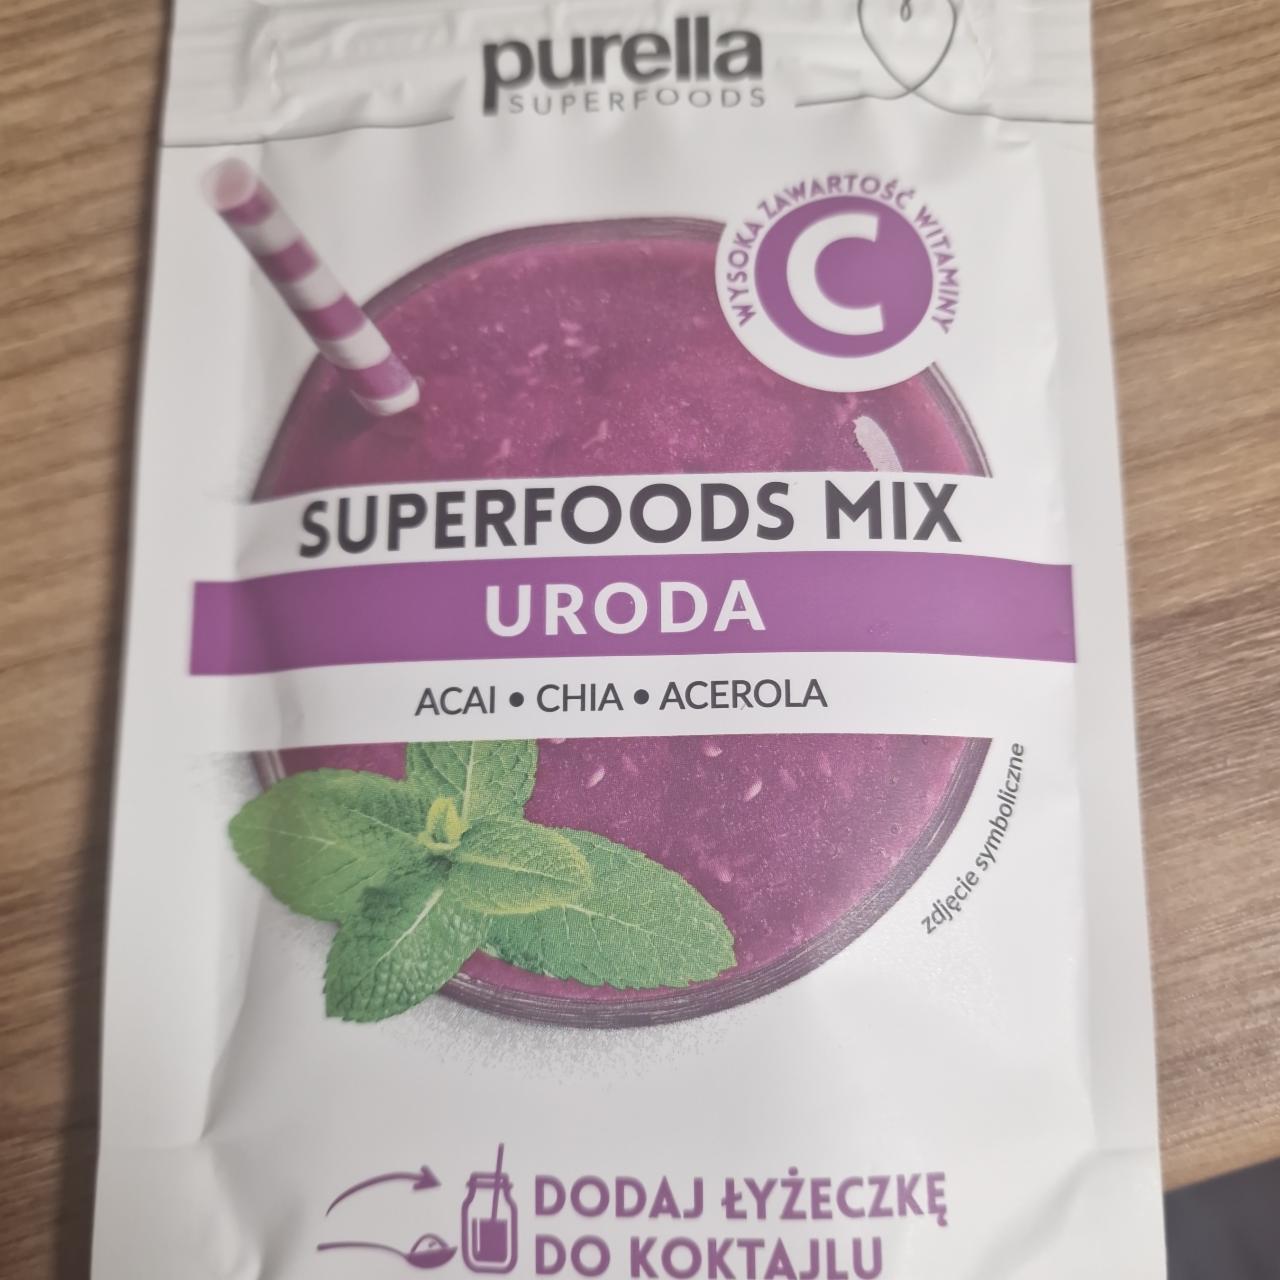 Zdjęcia - Superfoods mix uroda acai chia acerola purella superfoods